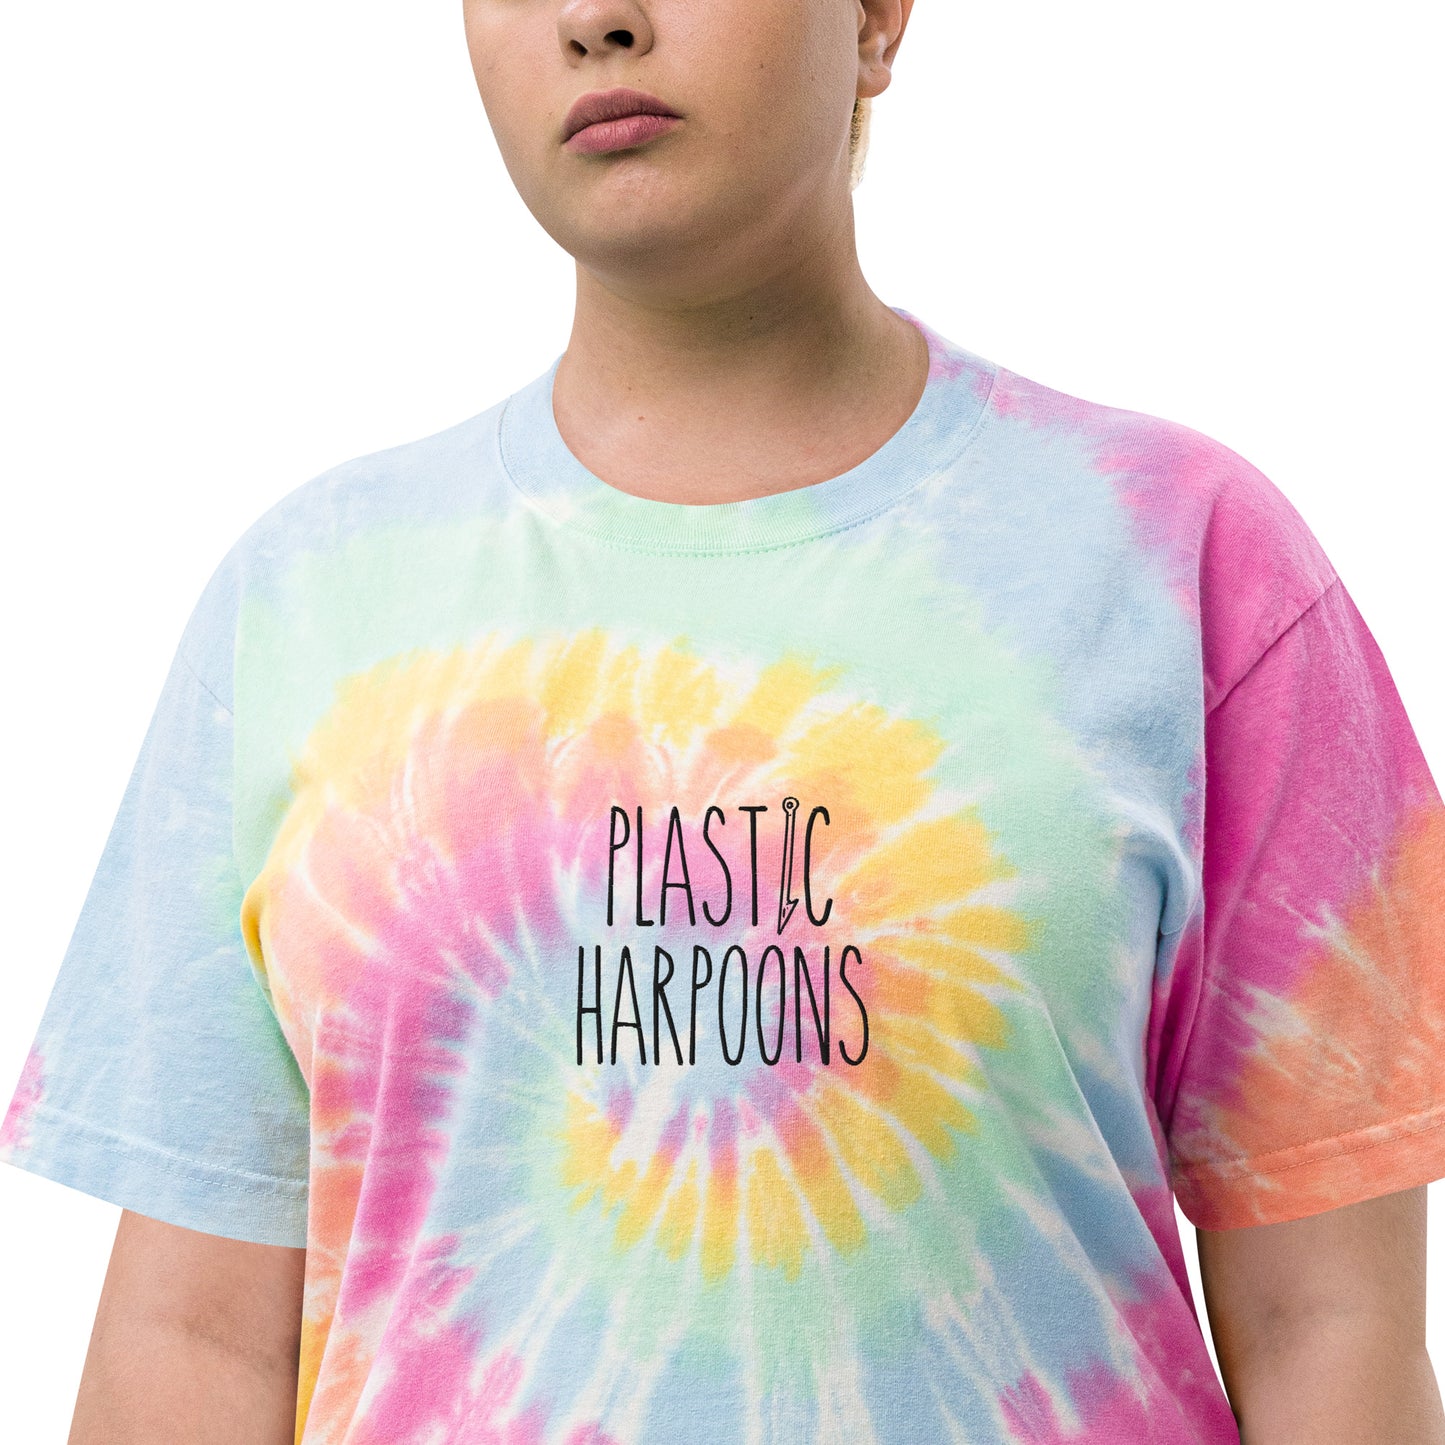 Plastic Harpoons Tie-dye Shirt